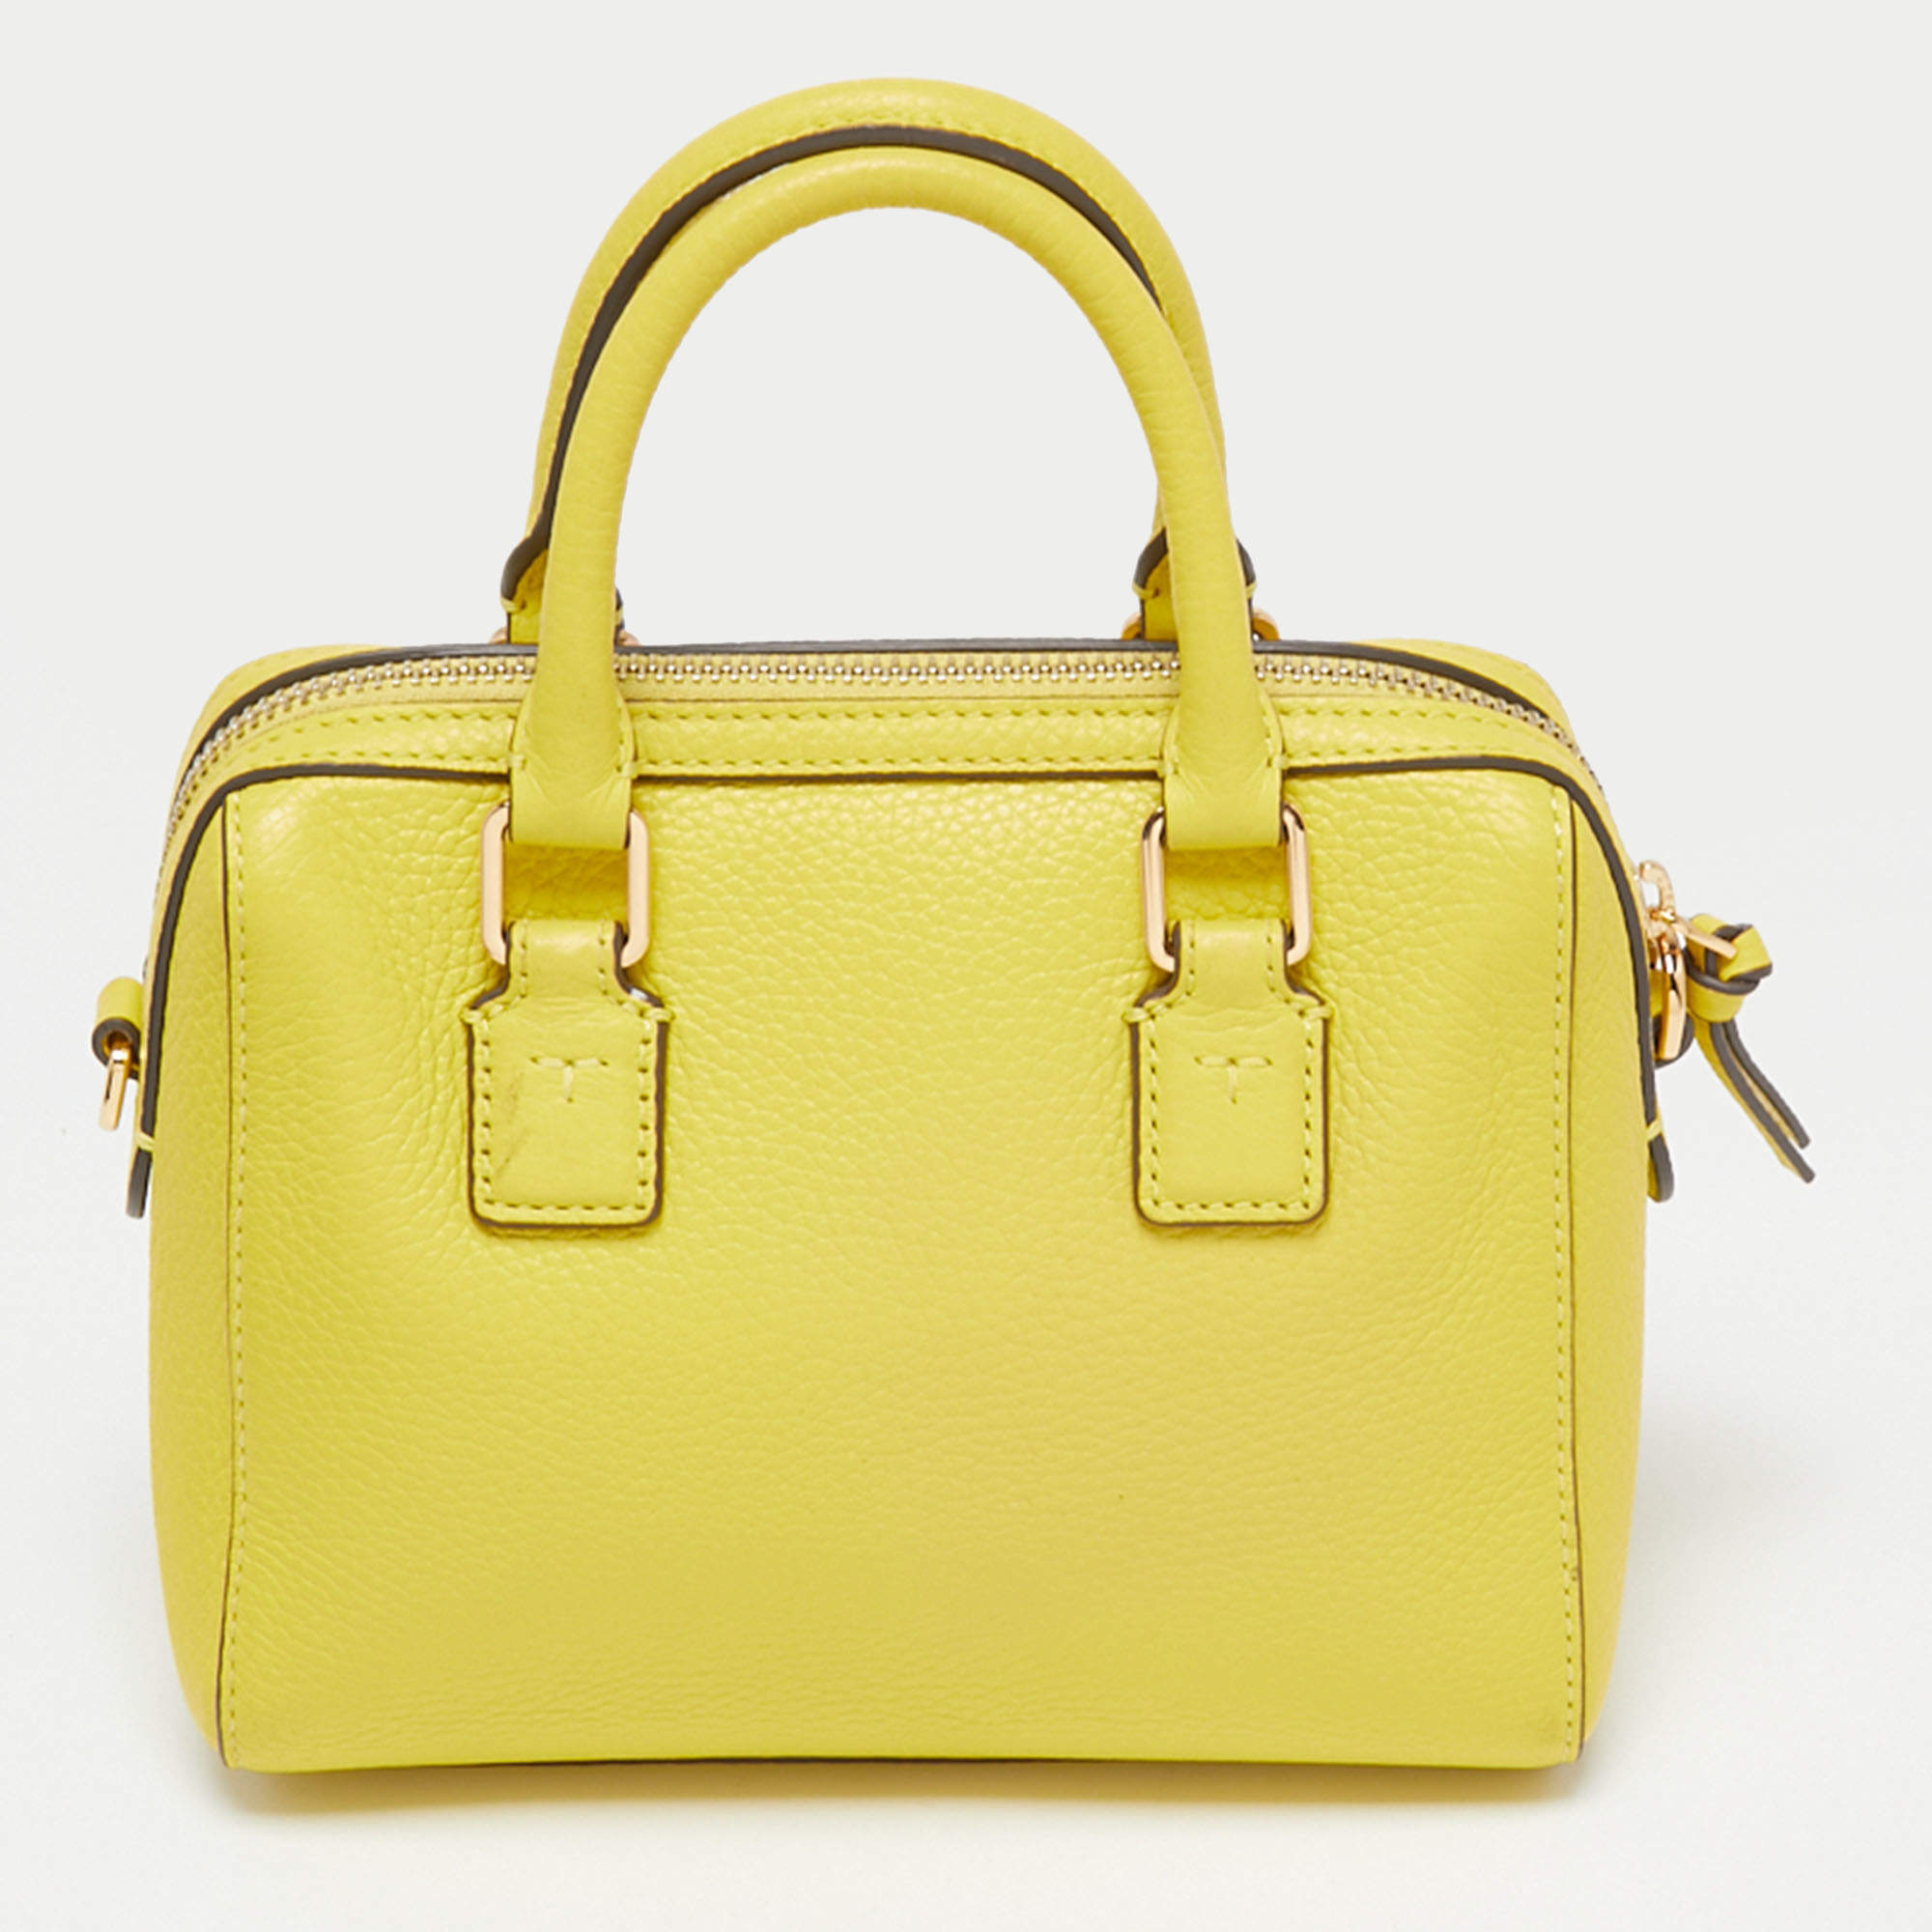 Tory Burch Yellow Leather Mini Thea Satchel Tory Burch | The Luxury Closet